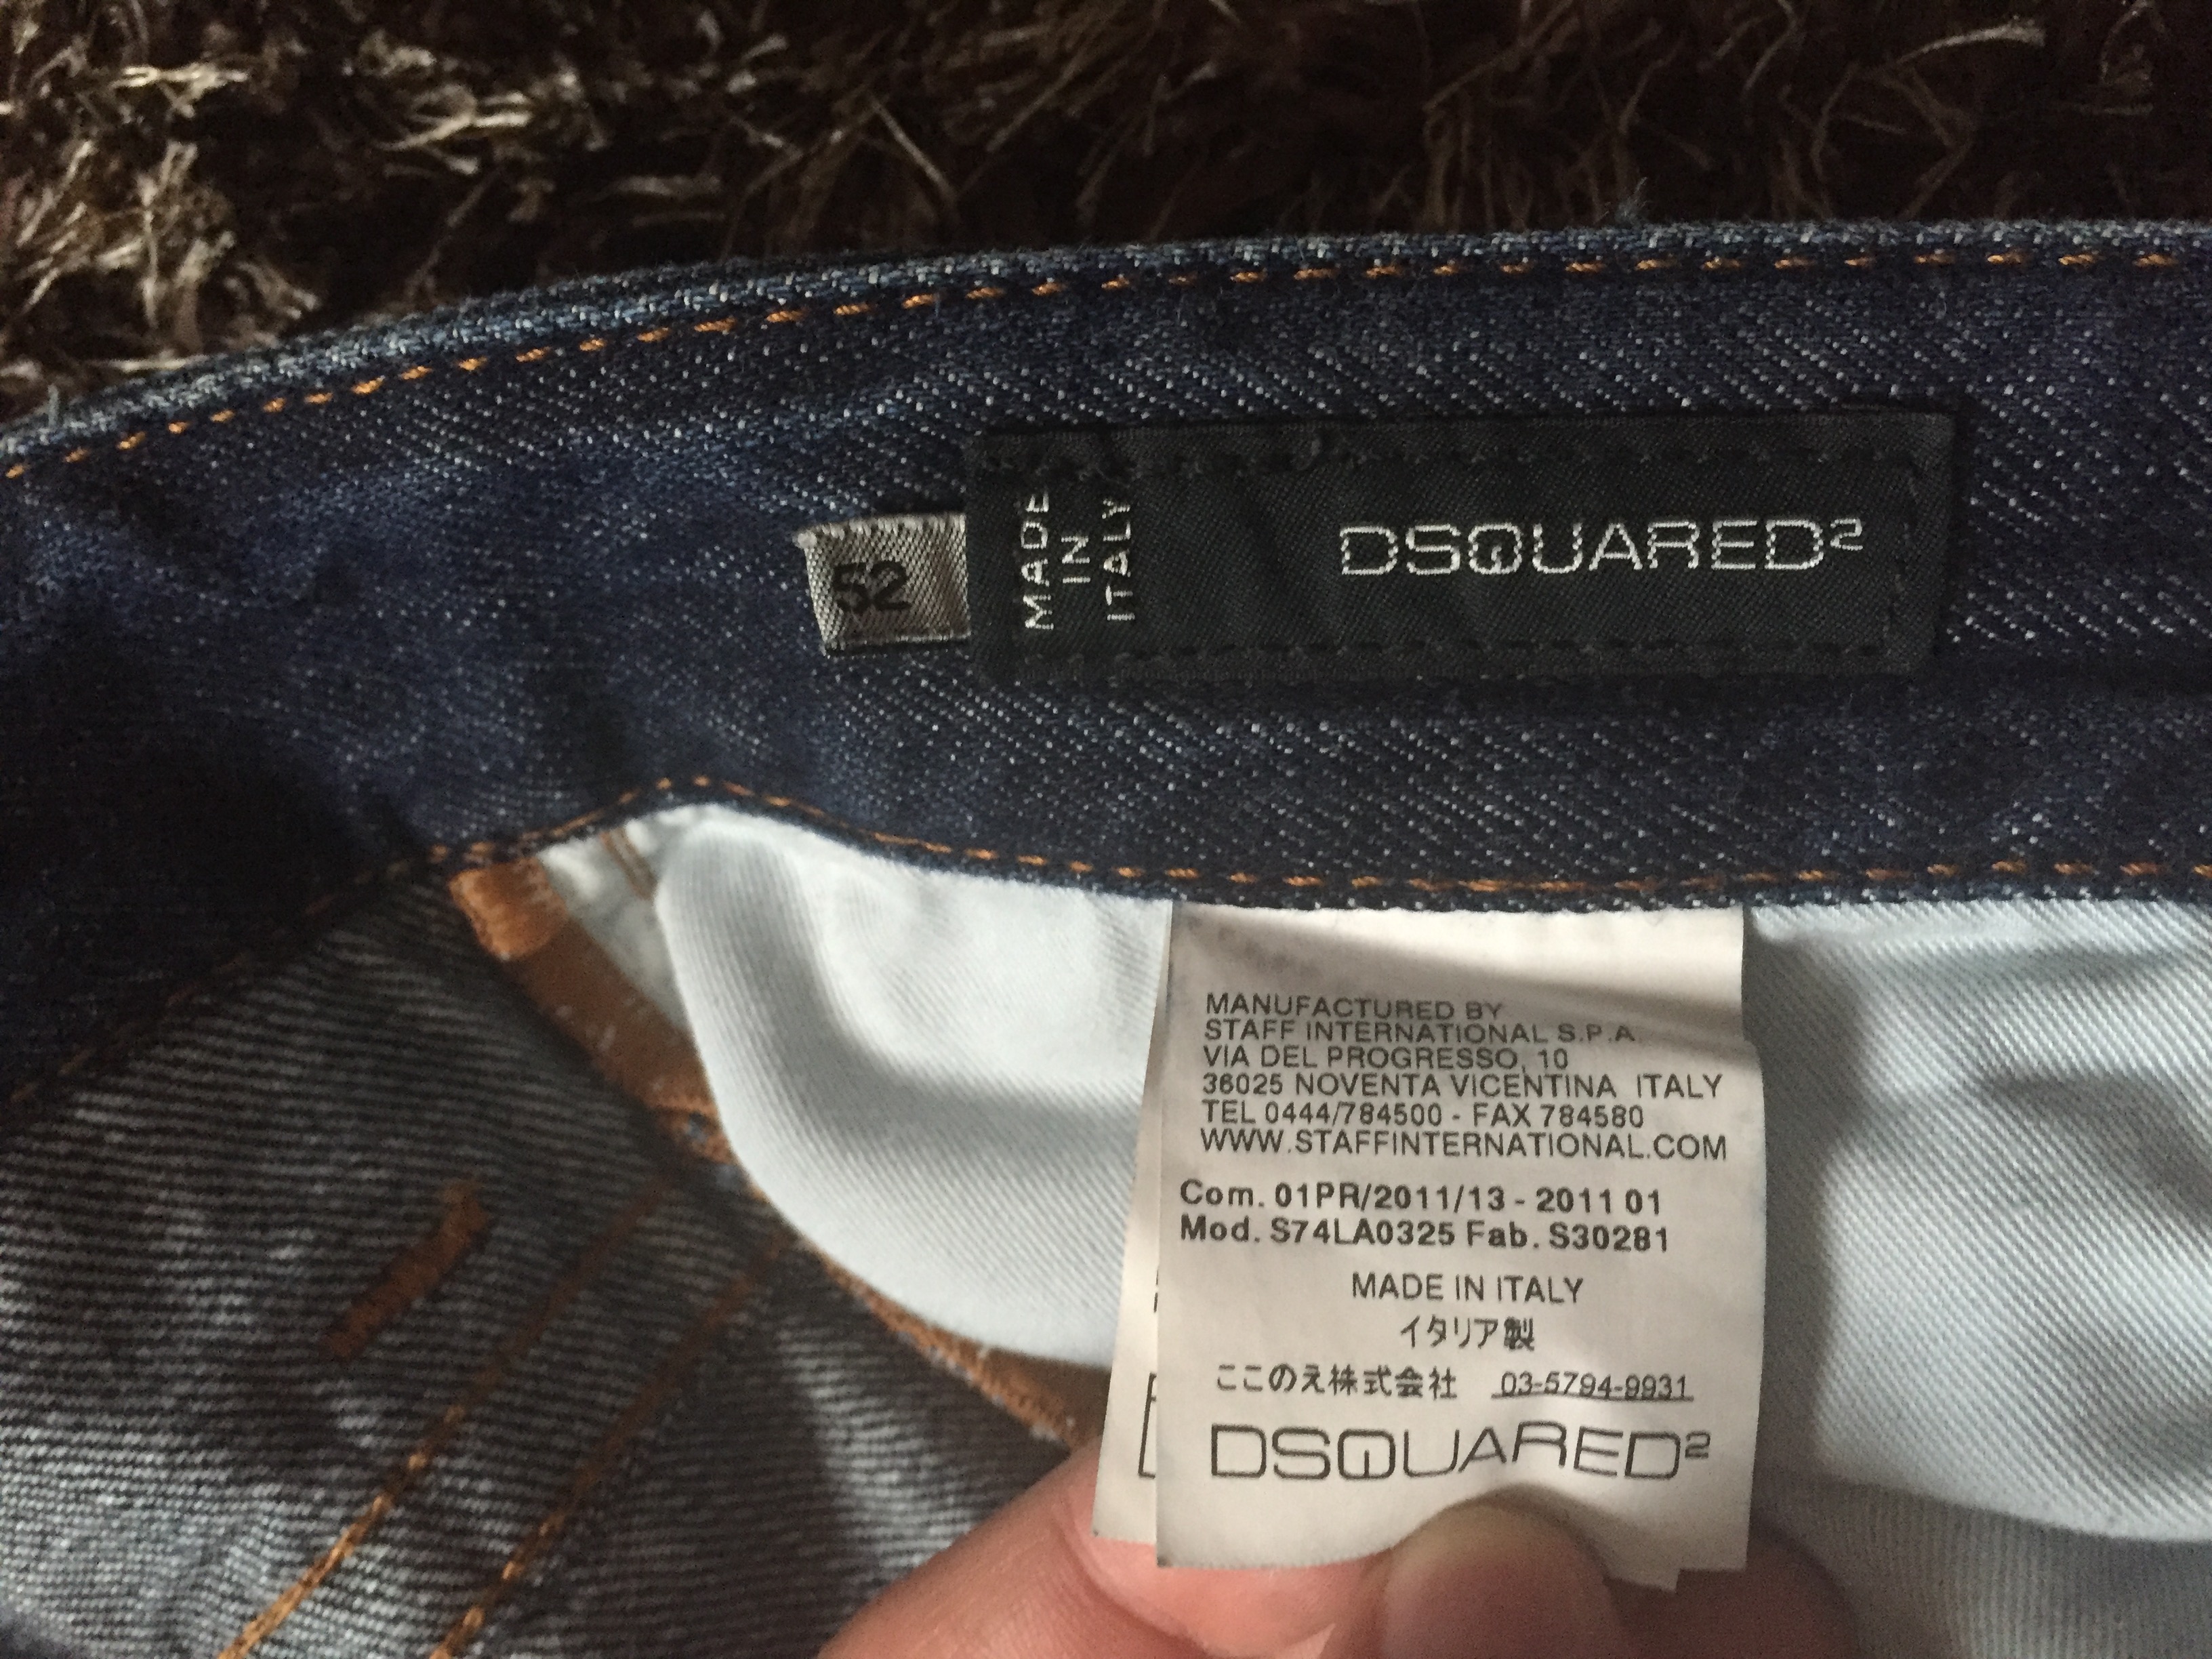 dsquared2 jeans label